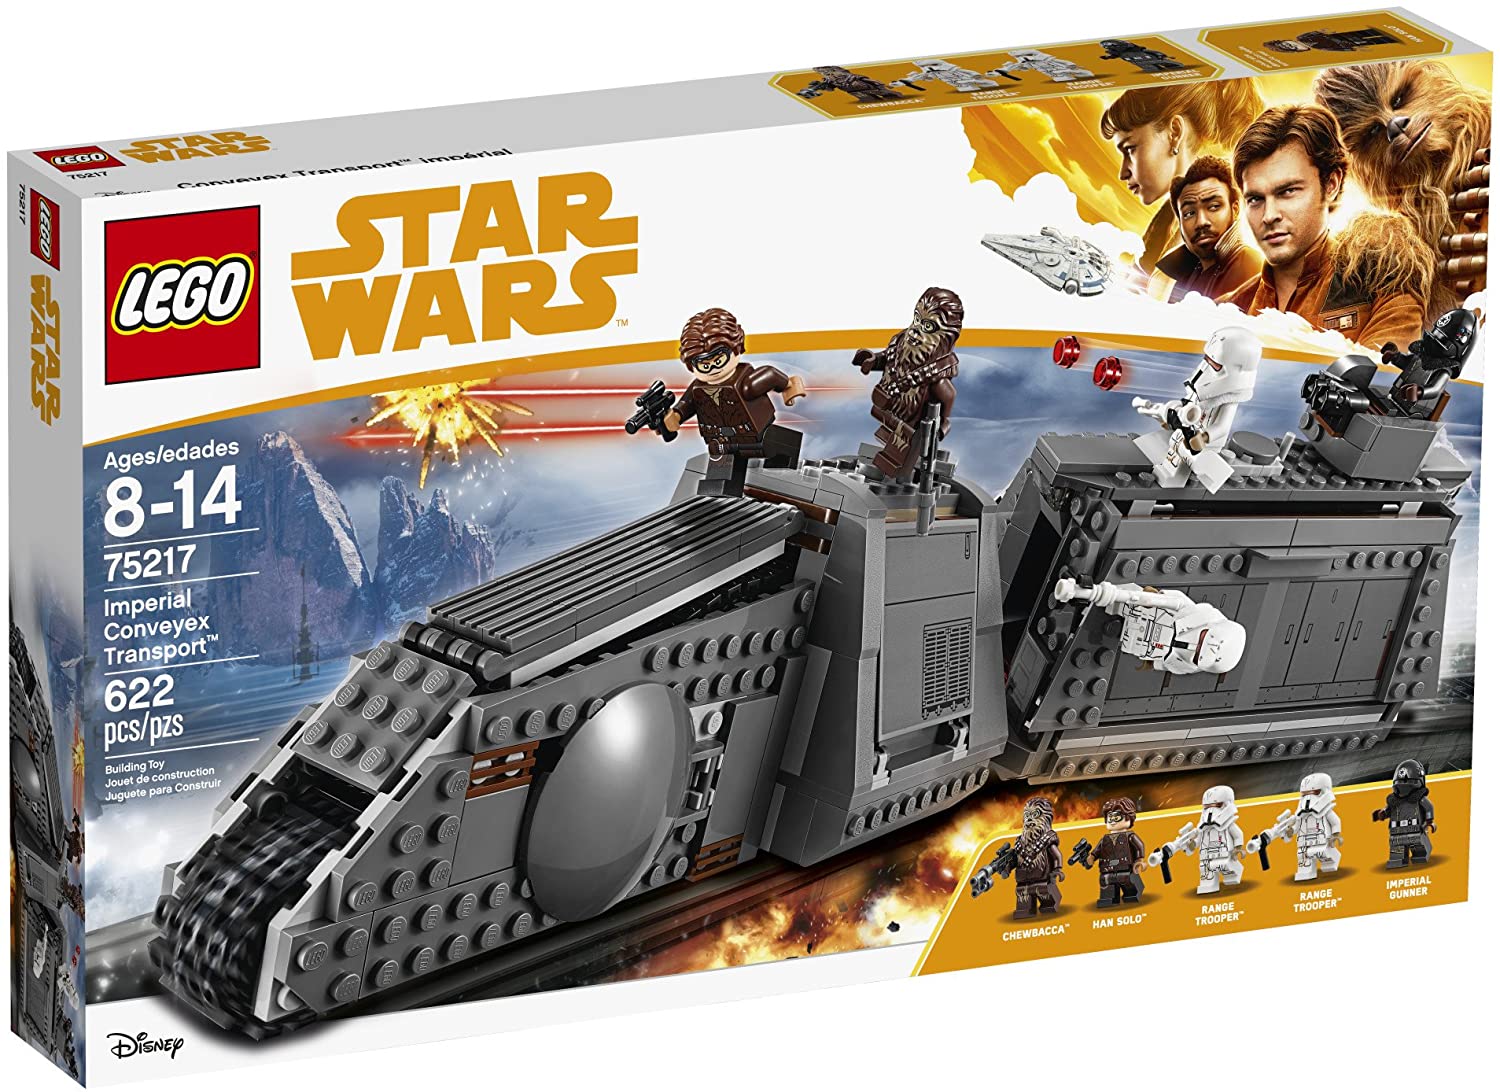 LEGO Star Wars Imperial Conveyex Transport Set 75217